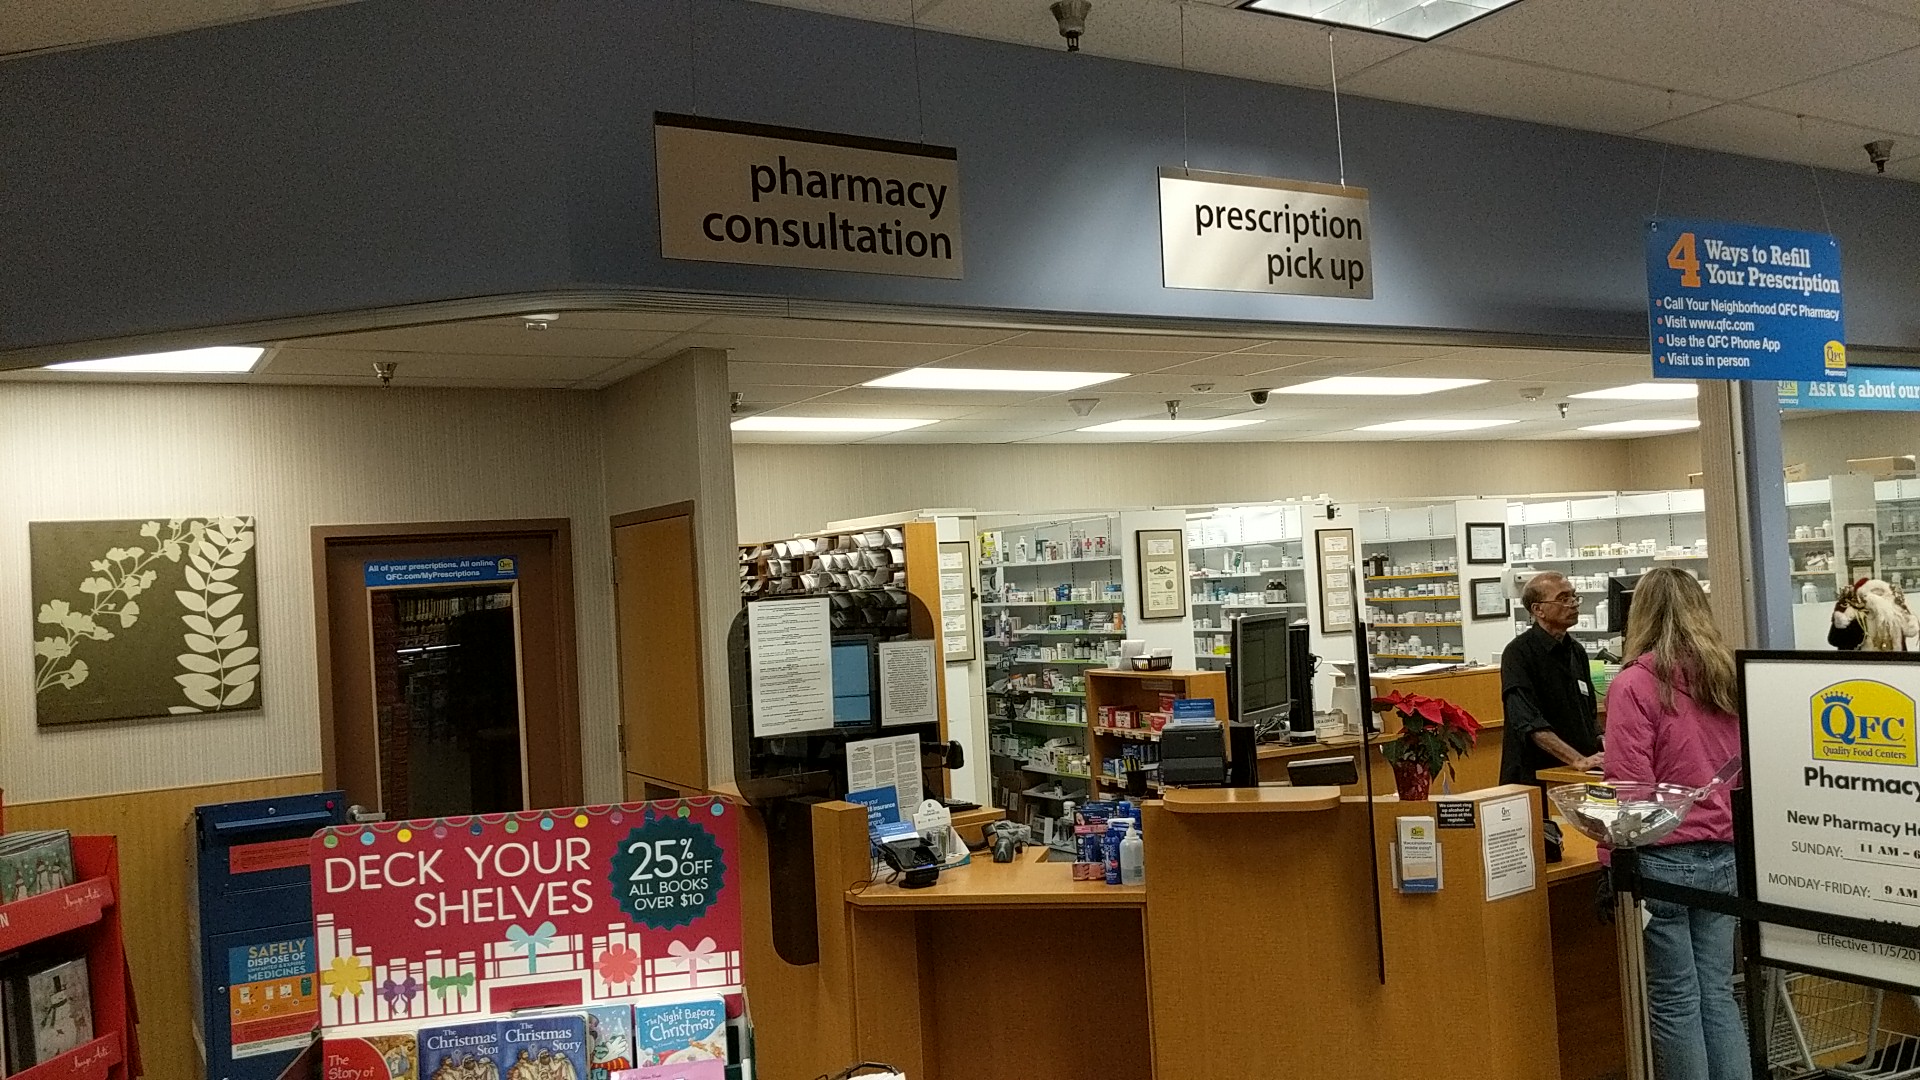 QFC Pharmacy